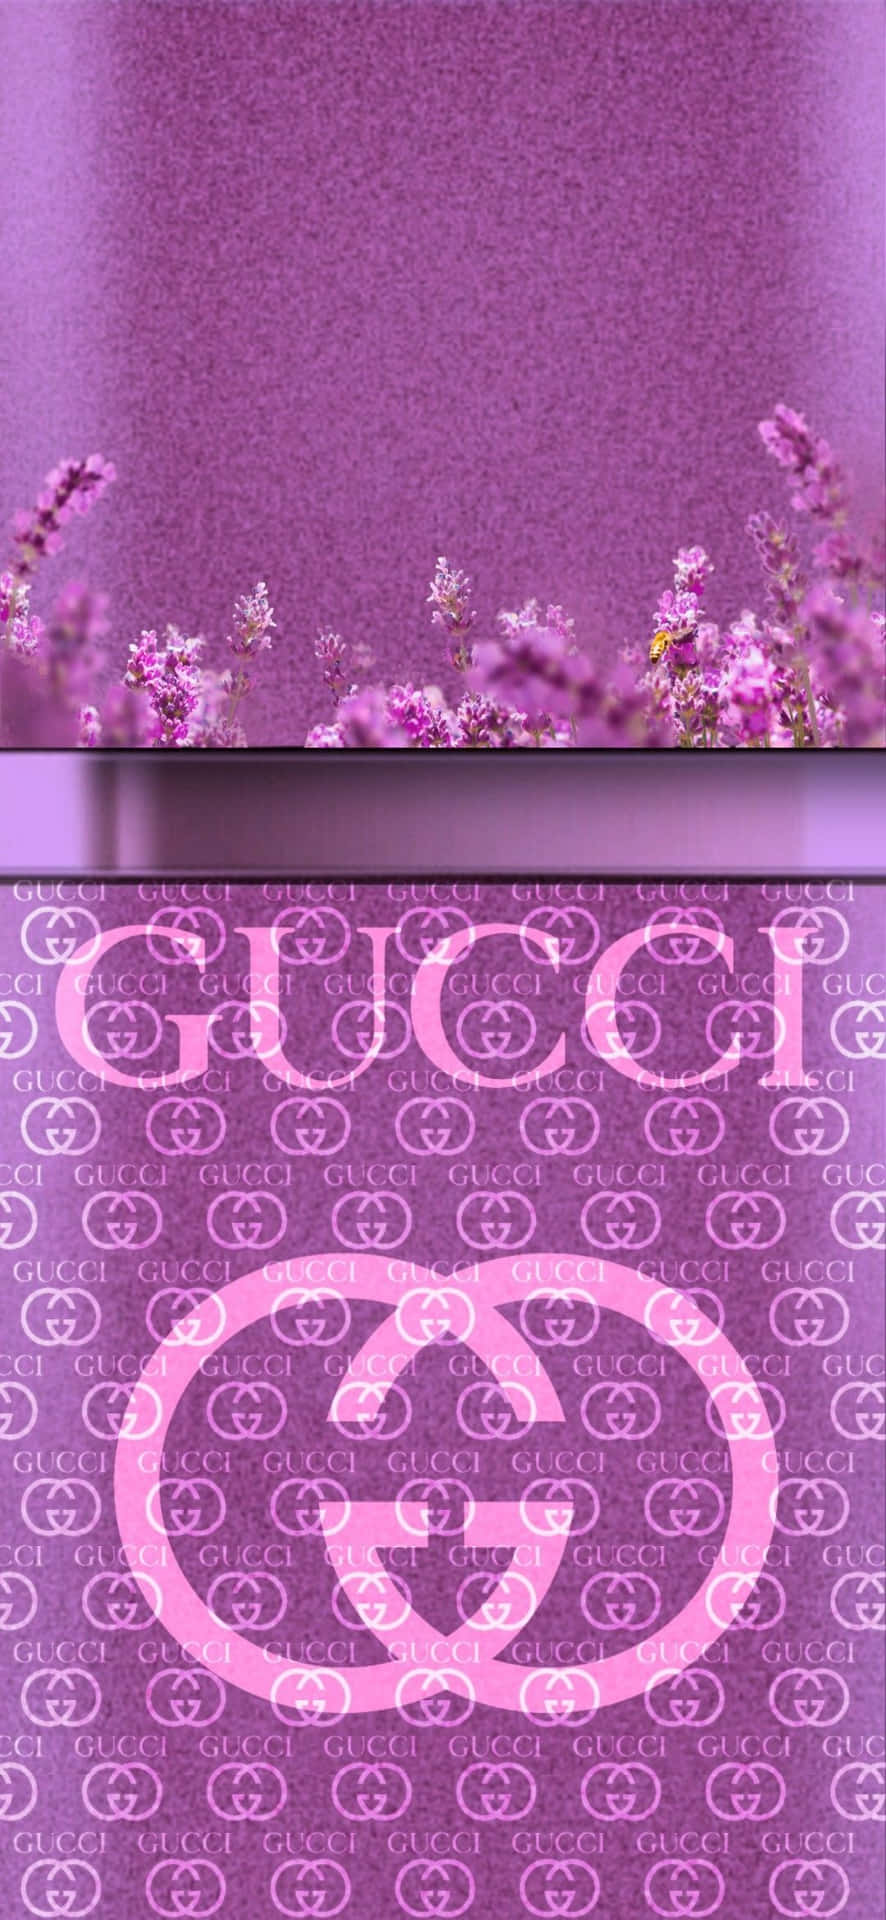 Background Gucci Wallpaper Discover more Accessories Clothes Fashion  House Gucci Ita  Cute summer wallpapers Iphone wallpaper vintage Gucci  wallpaper iphone